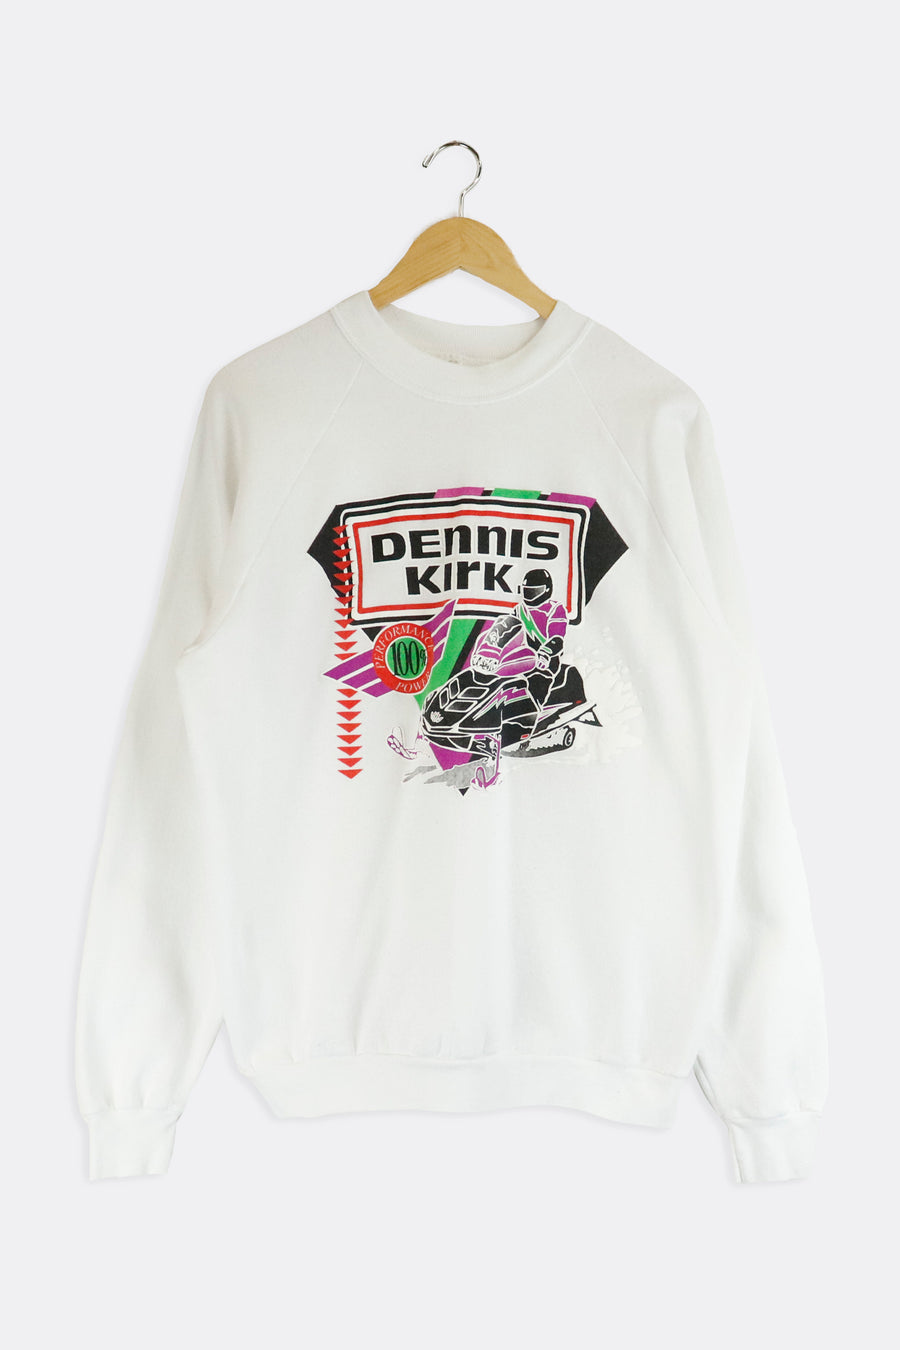 Vintage Dennis Kirk Snowmobile Sweatshirt Sz XL